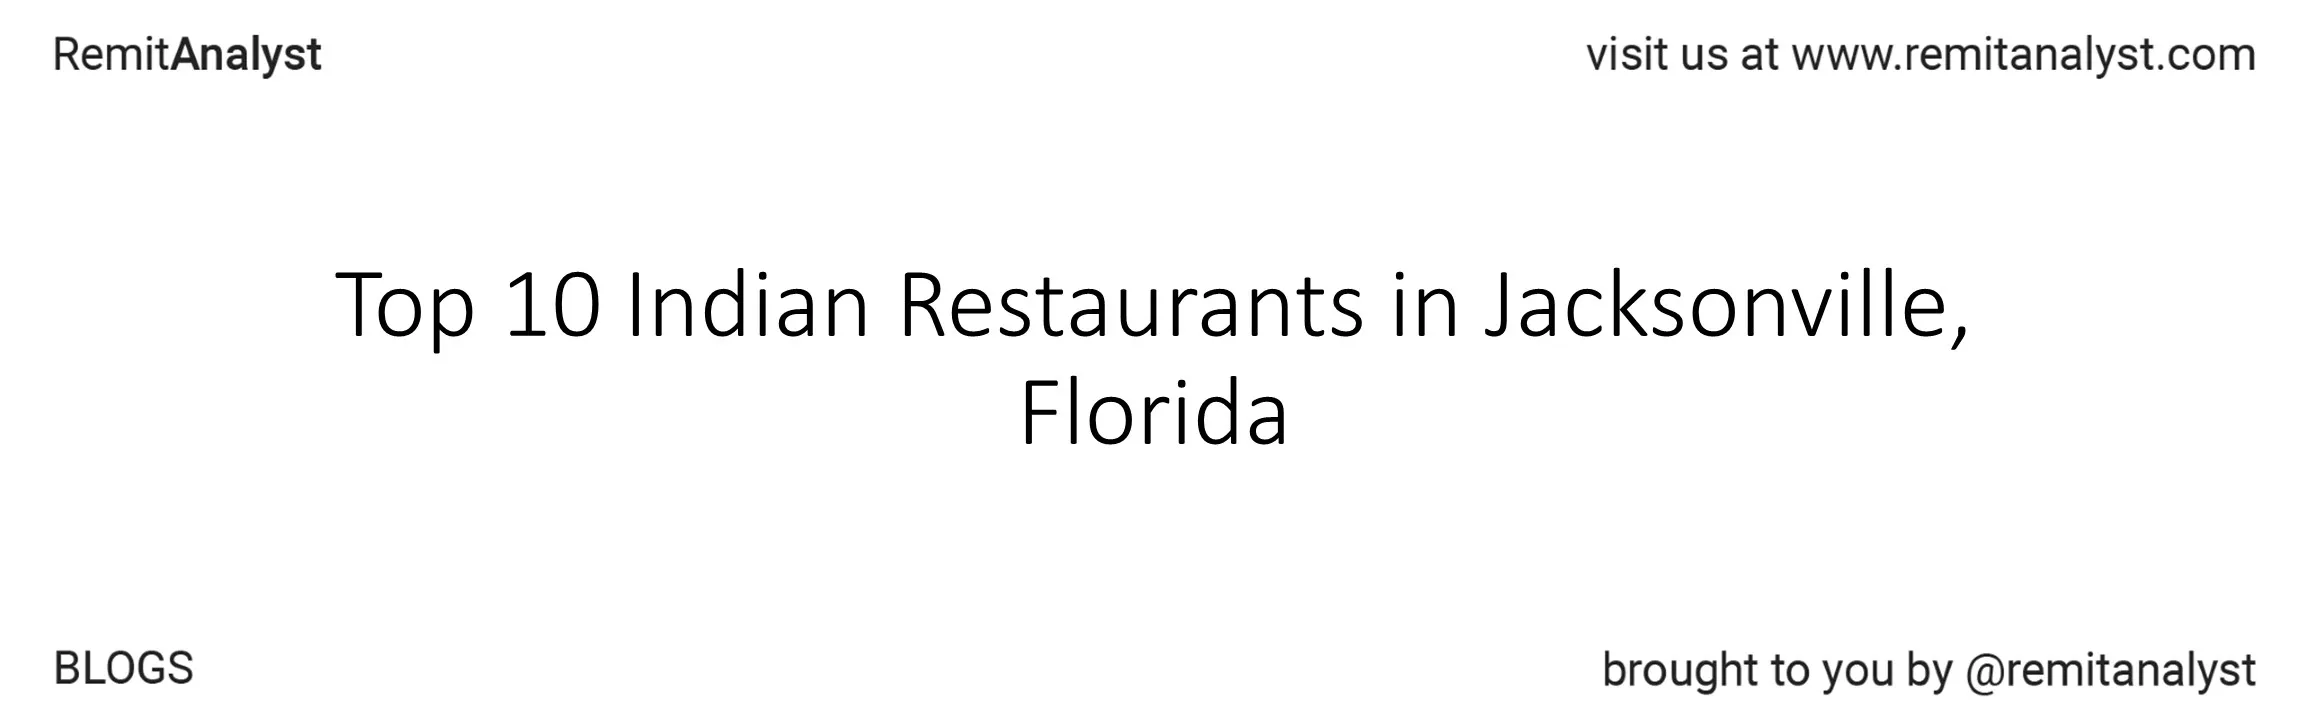 famous-indian-restaurants-jacksonville-title